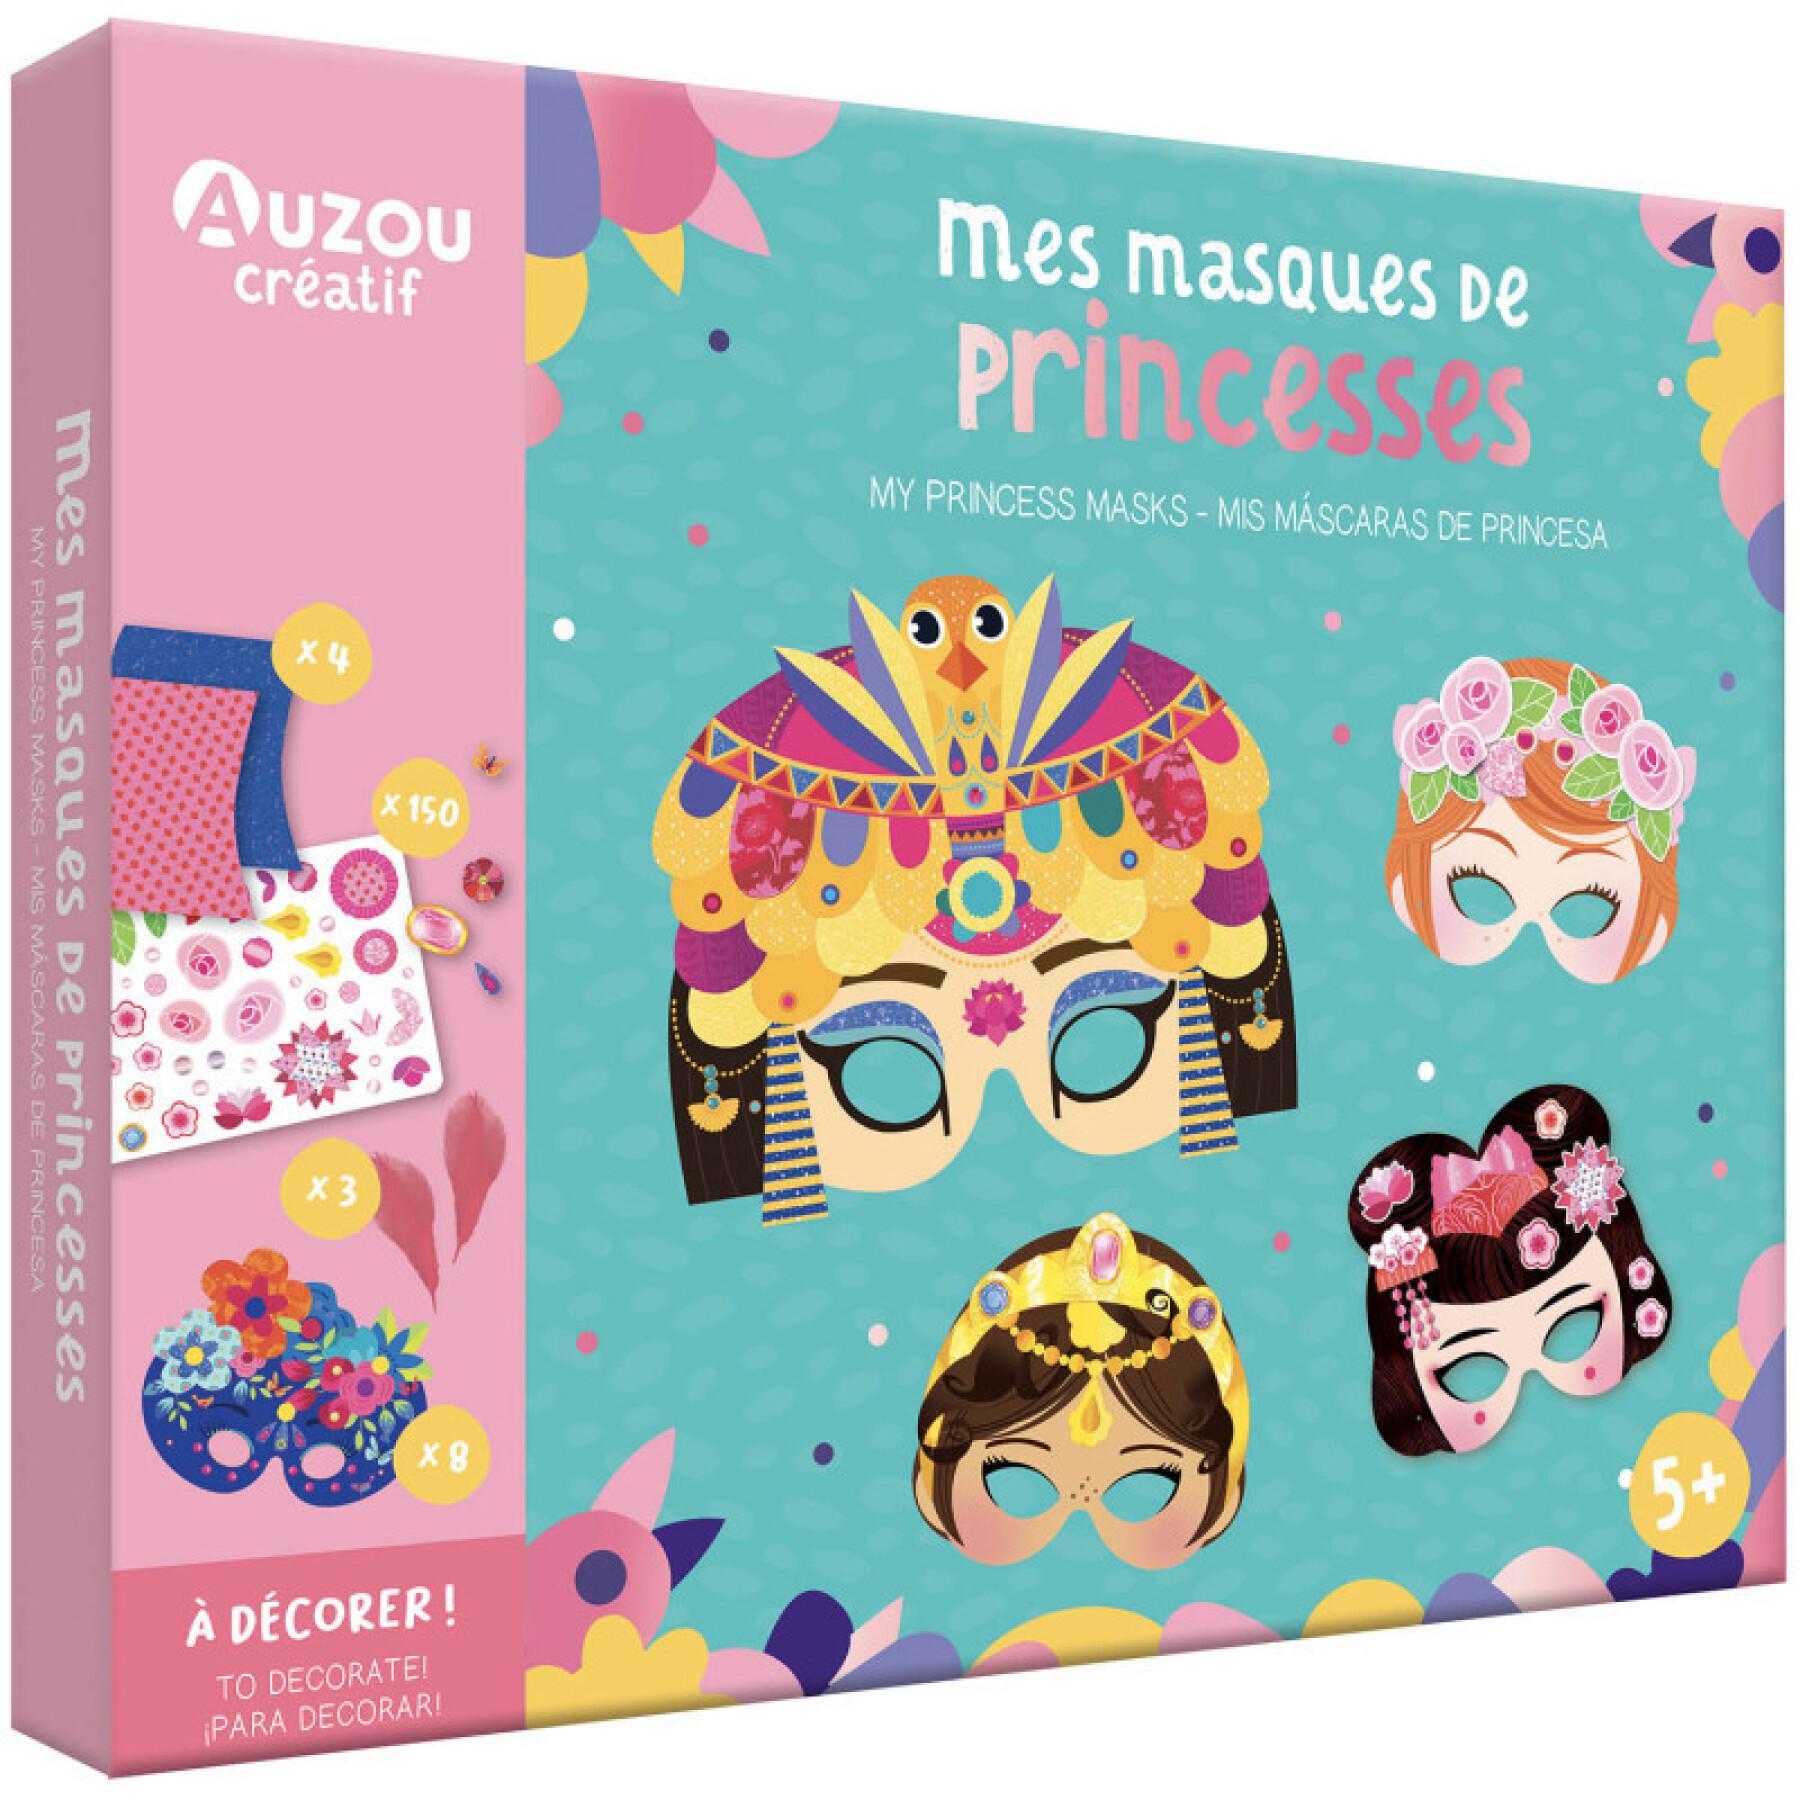 My princess masks disguise Auzou